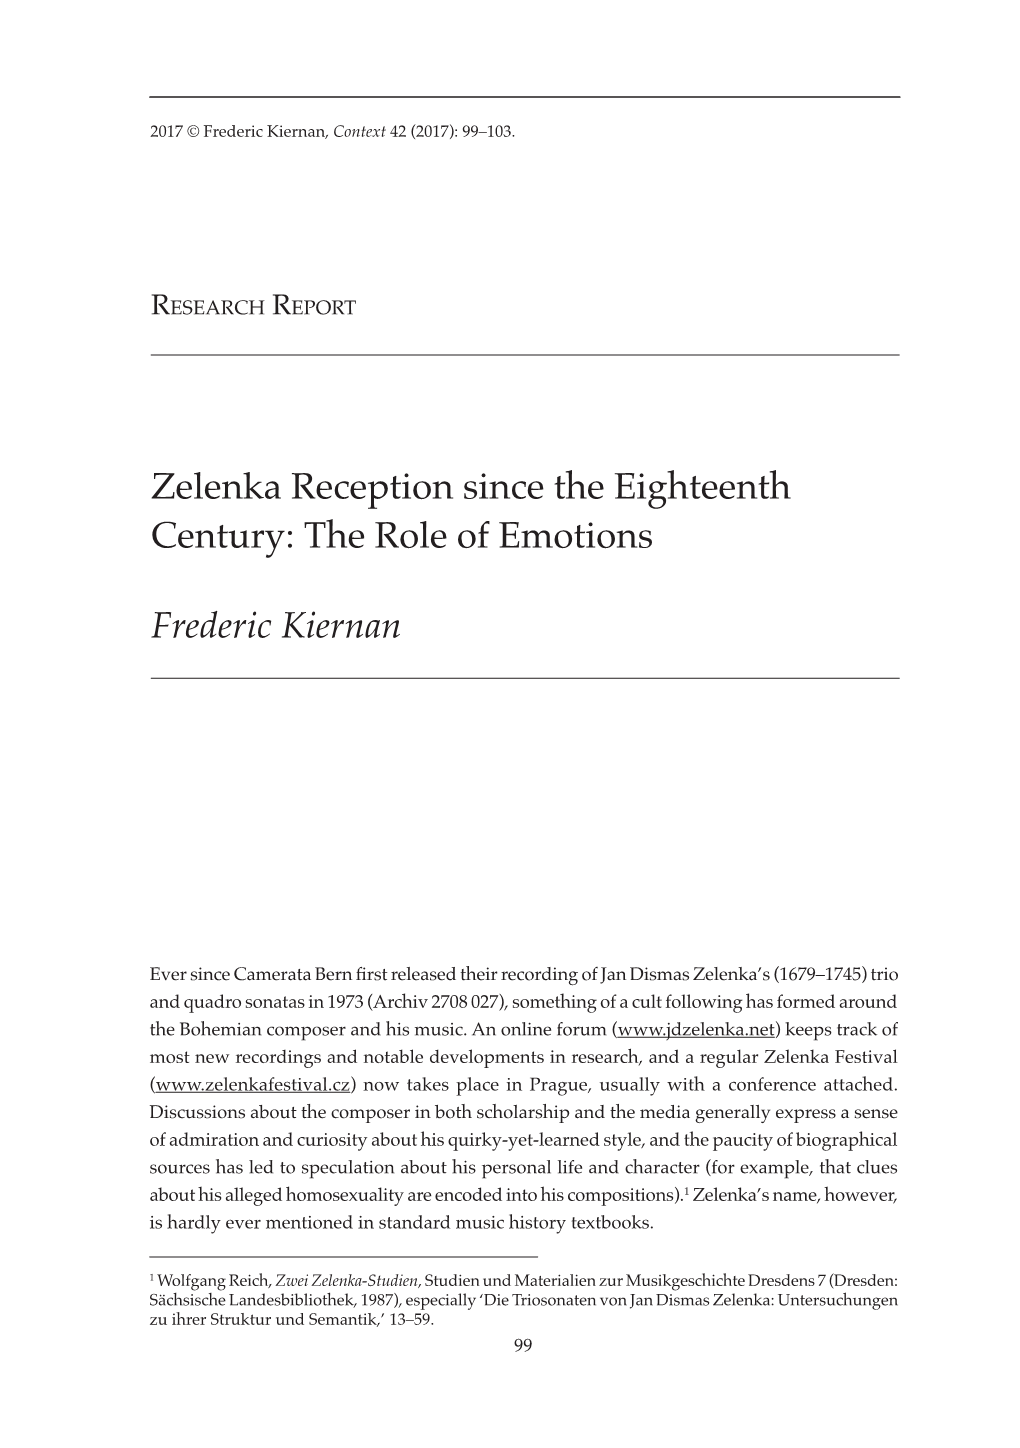 Zelenka Reception Since the Eighteenth Century: the Role of Emotions